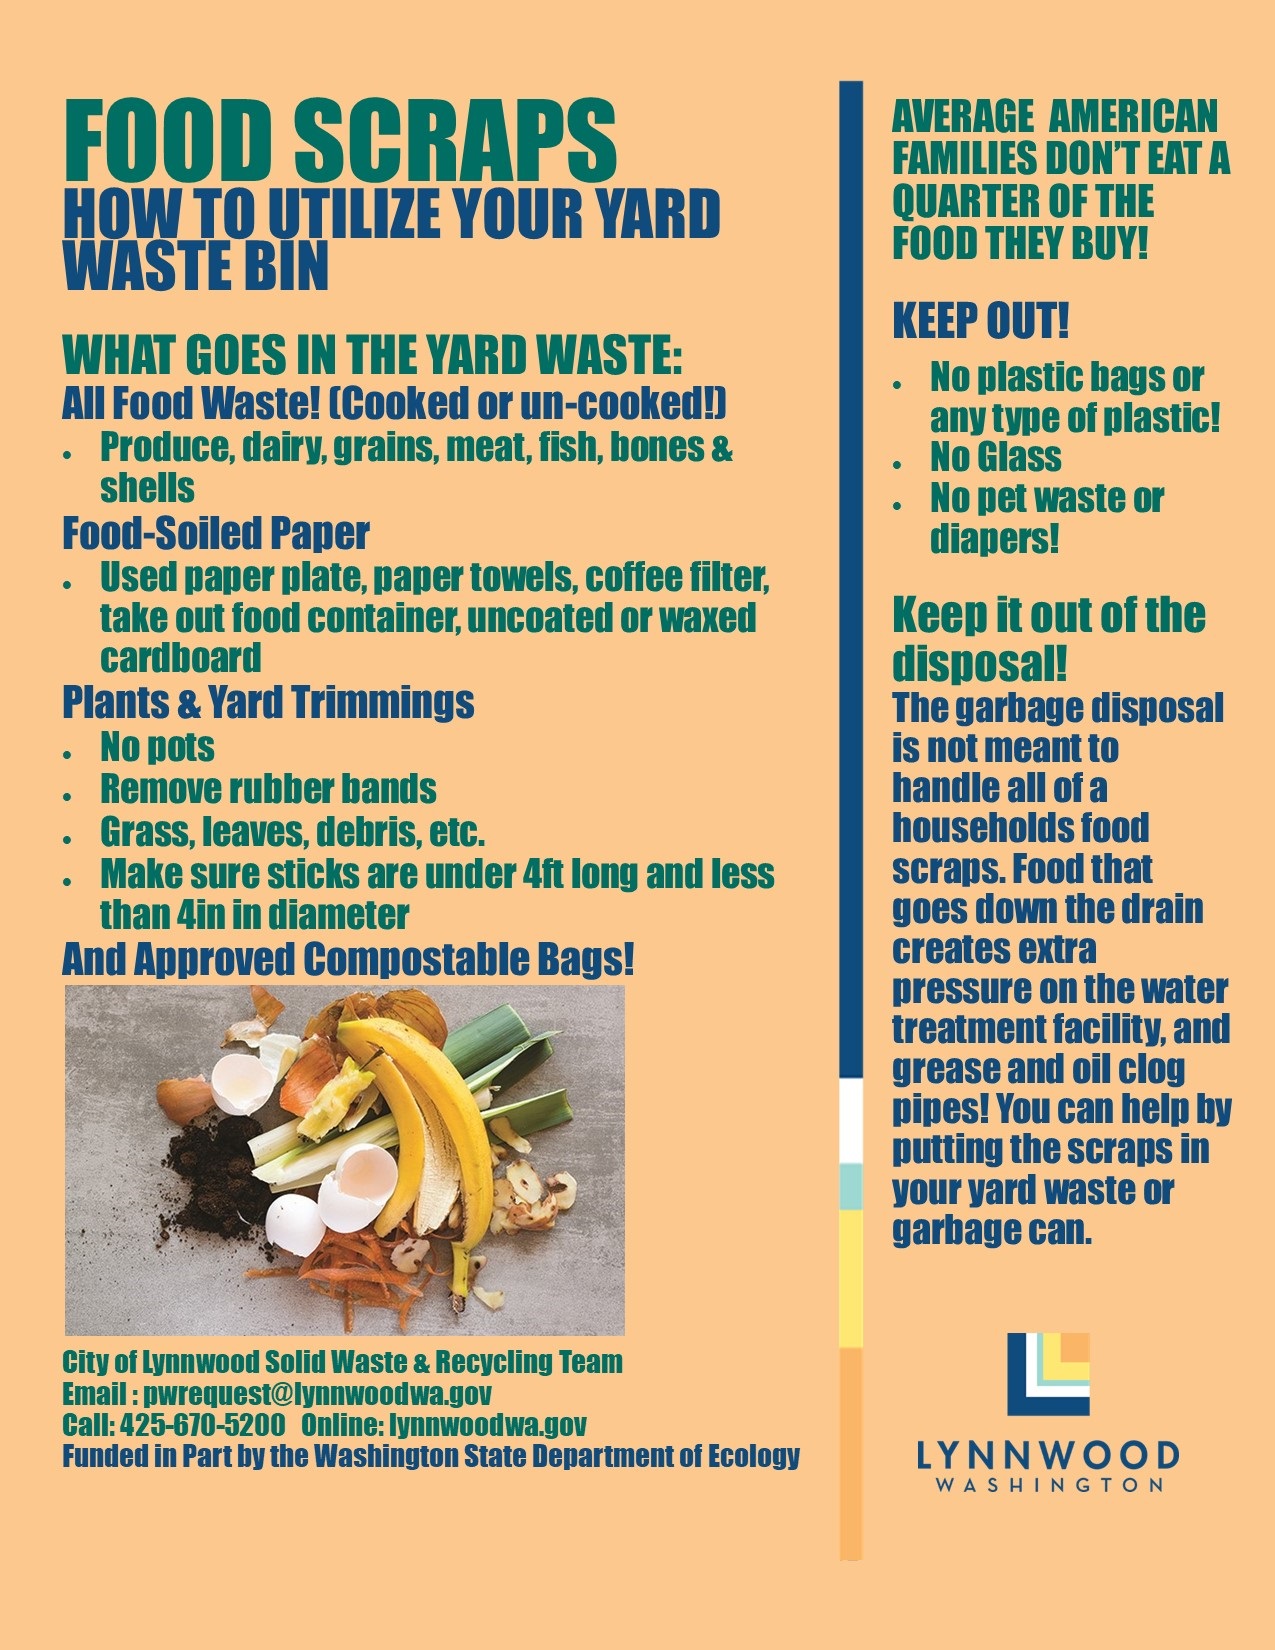 Flyer describing how to utilize your yard waste bin